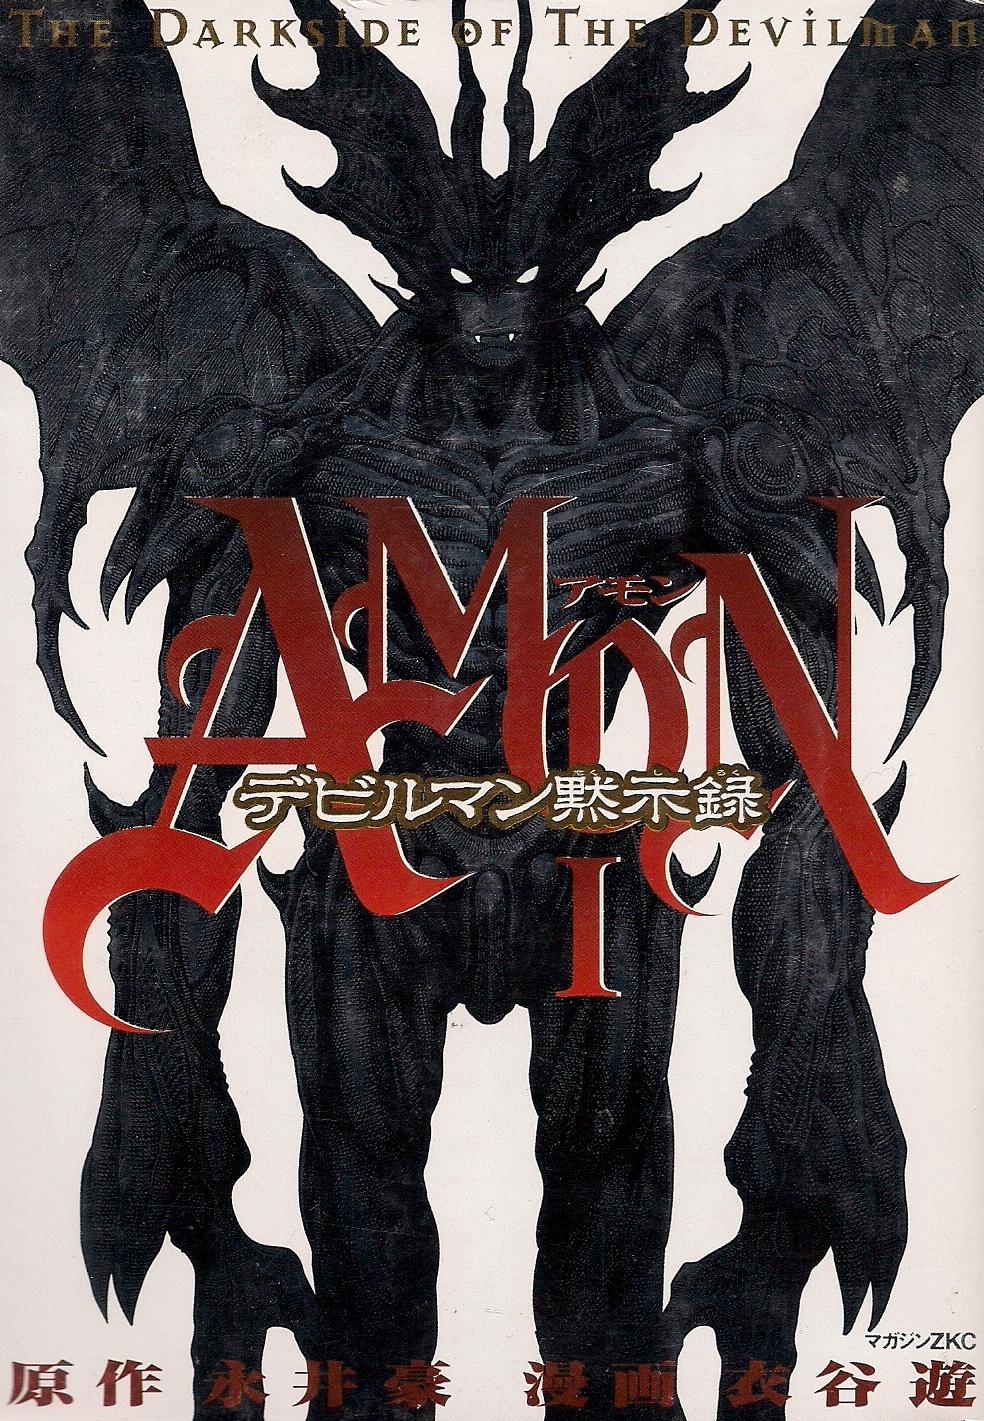 Amon the Darkside of Devilman Volume 1 cover